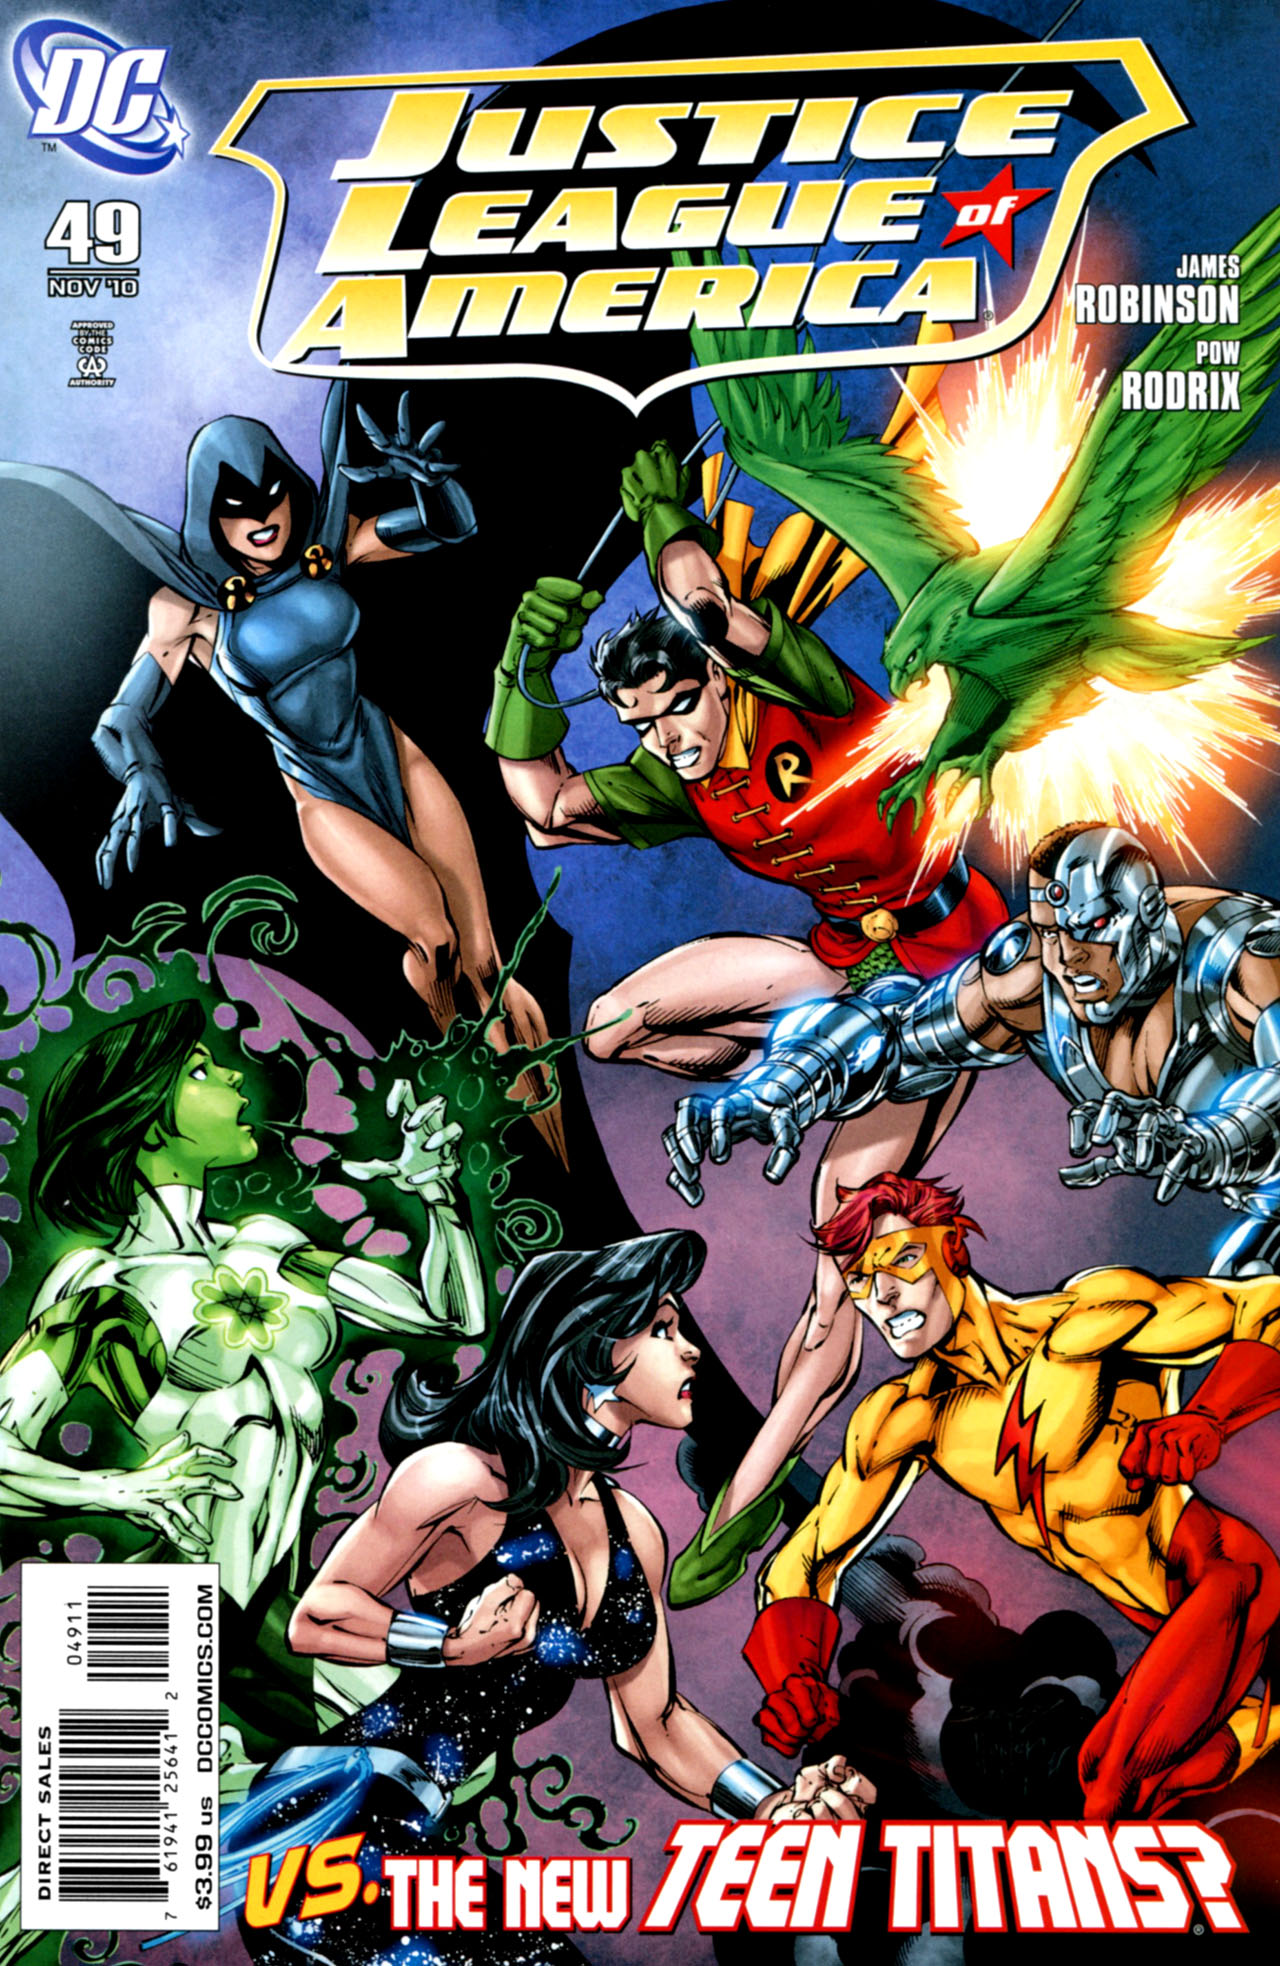 Justice League of America Vol. 2 #49